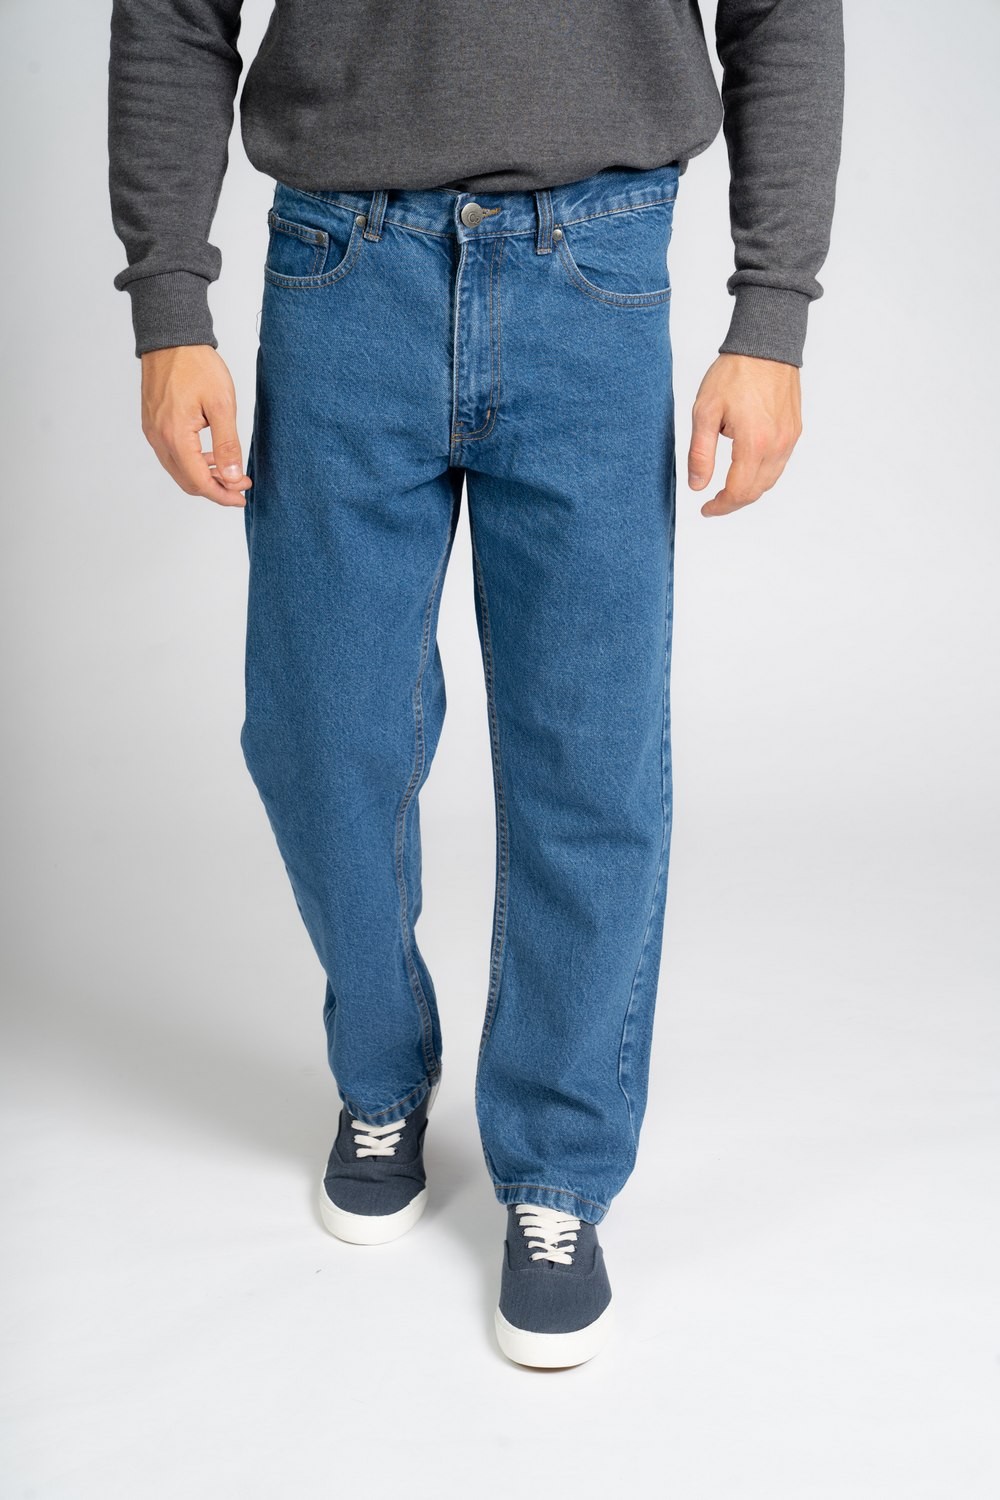 Carabou Jeans ACJ waist size 44R